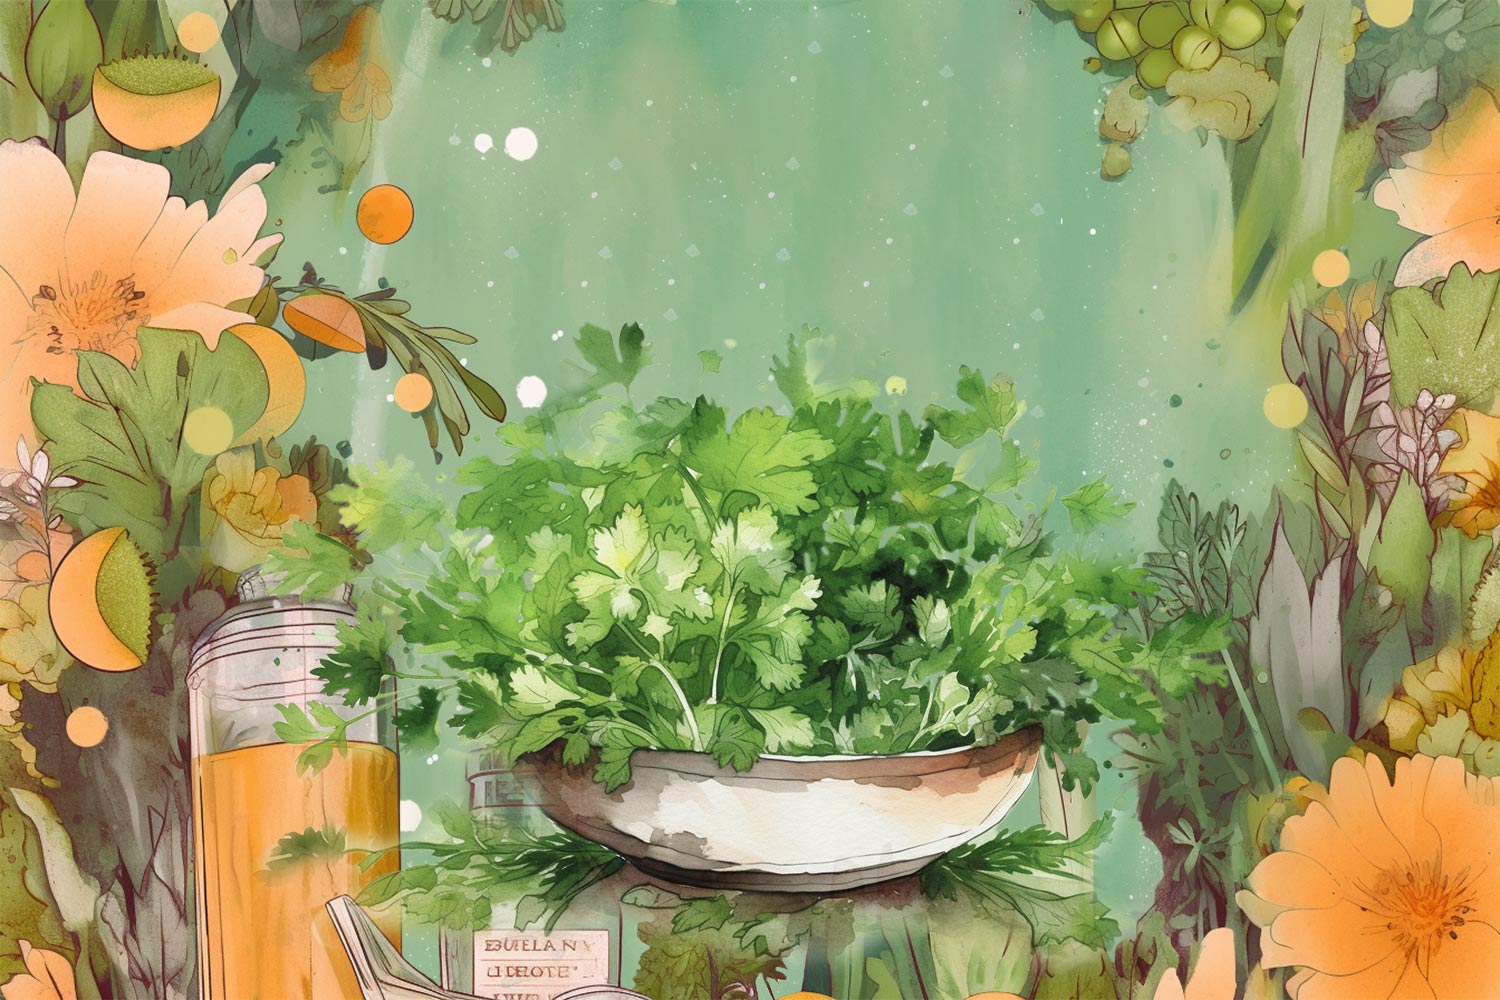 Illustration of cilantro with flowers surrounding